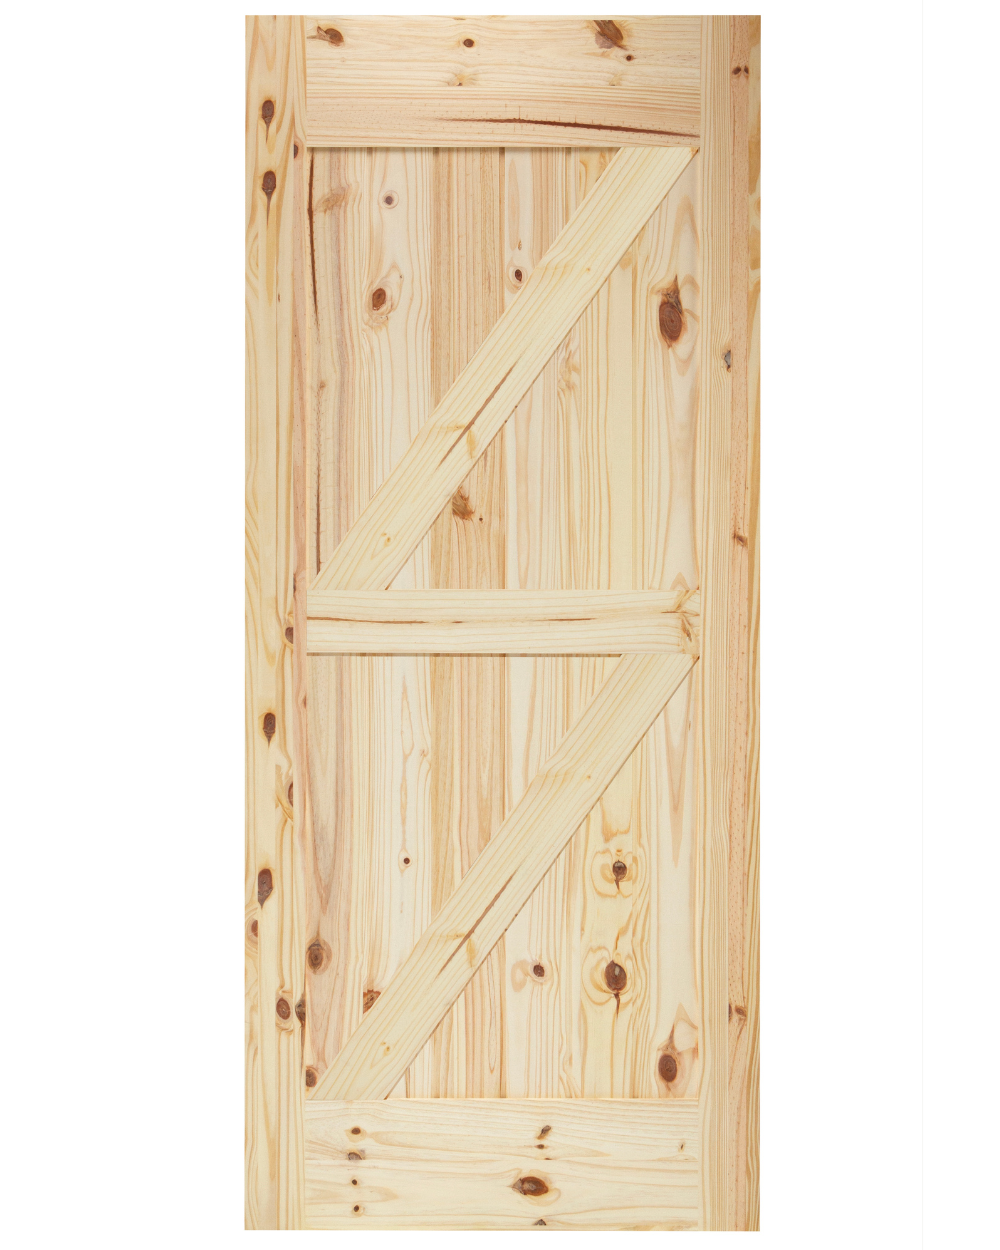 Double Z-Brace V-Groove Knotty Pine Barn Door